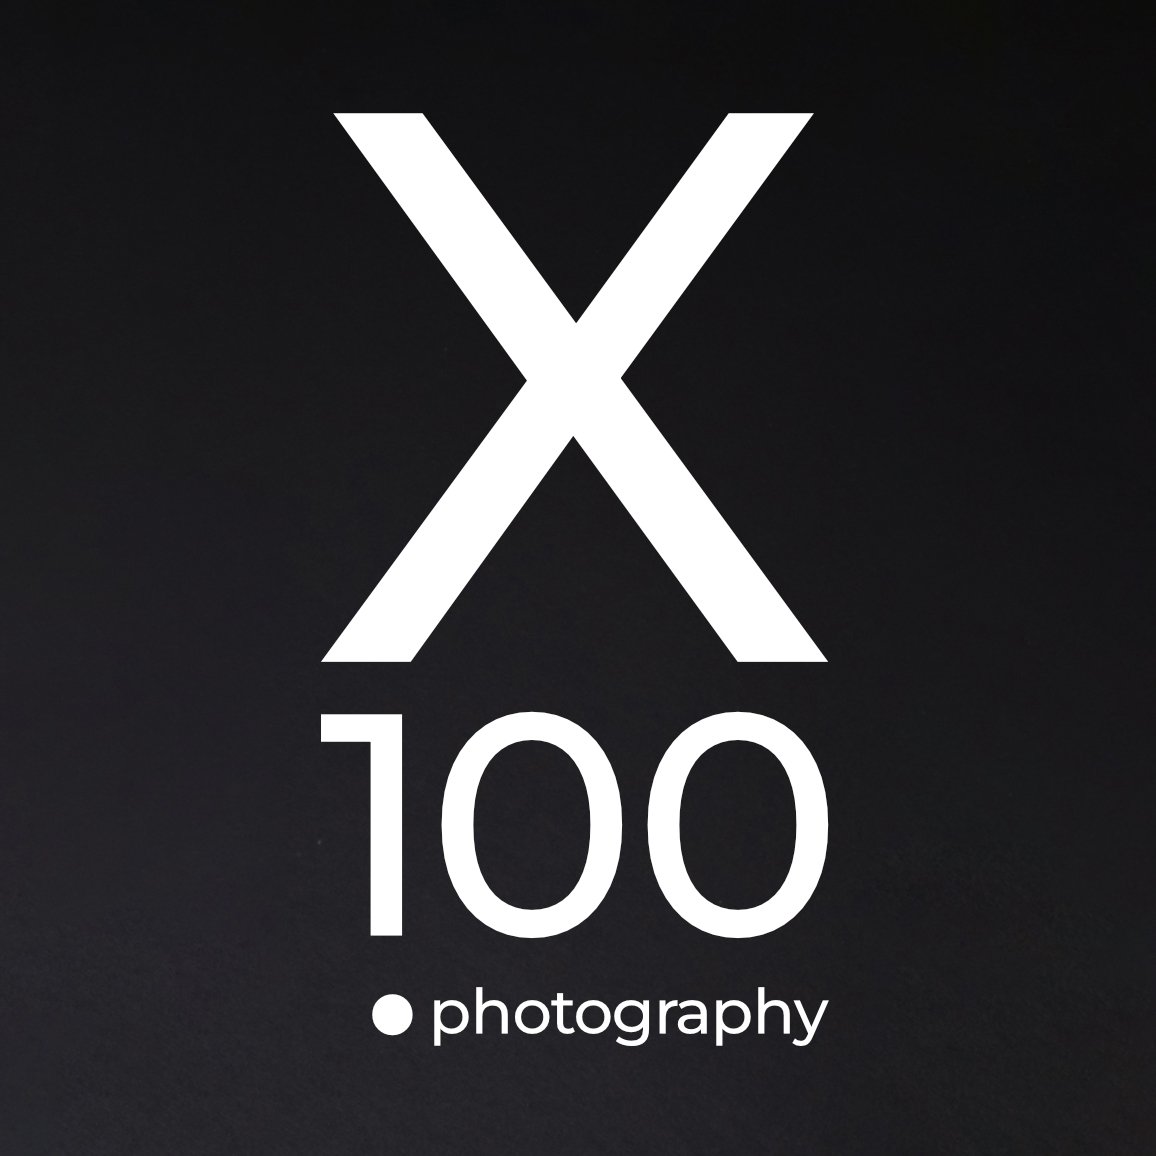 X100 Photography